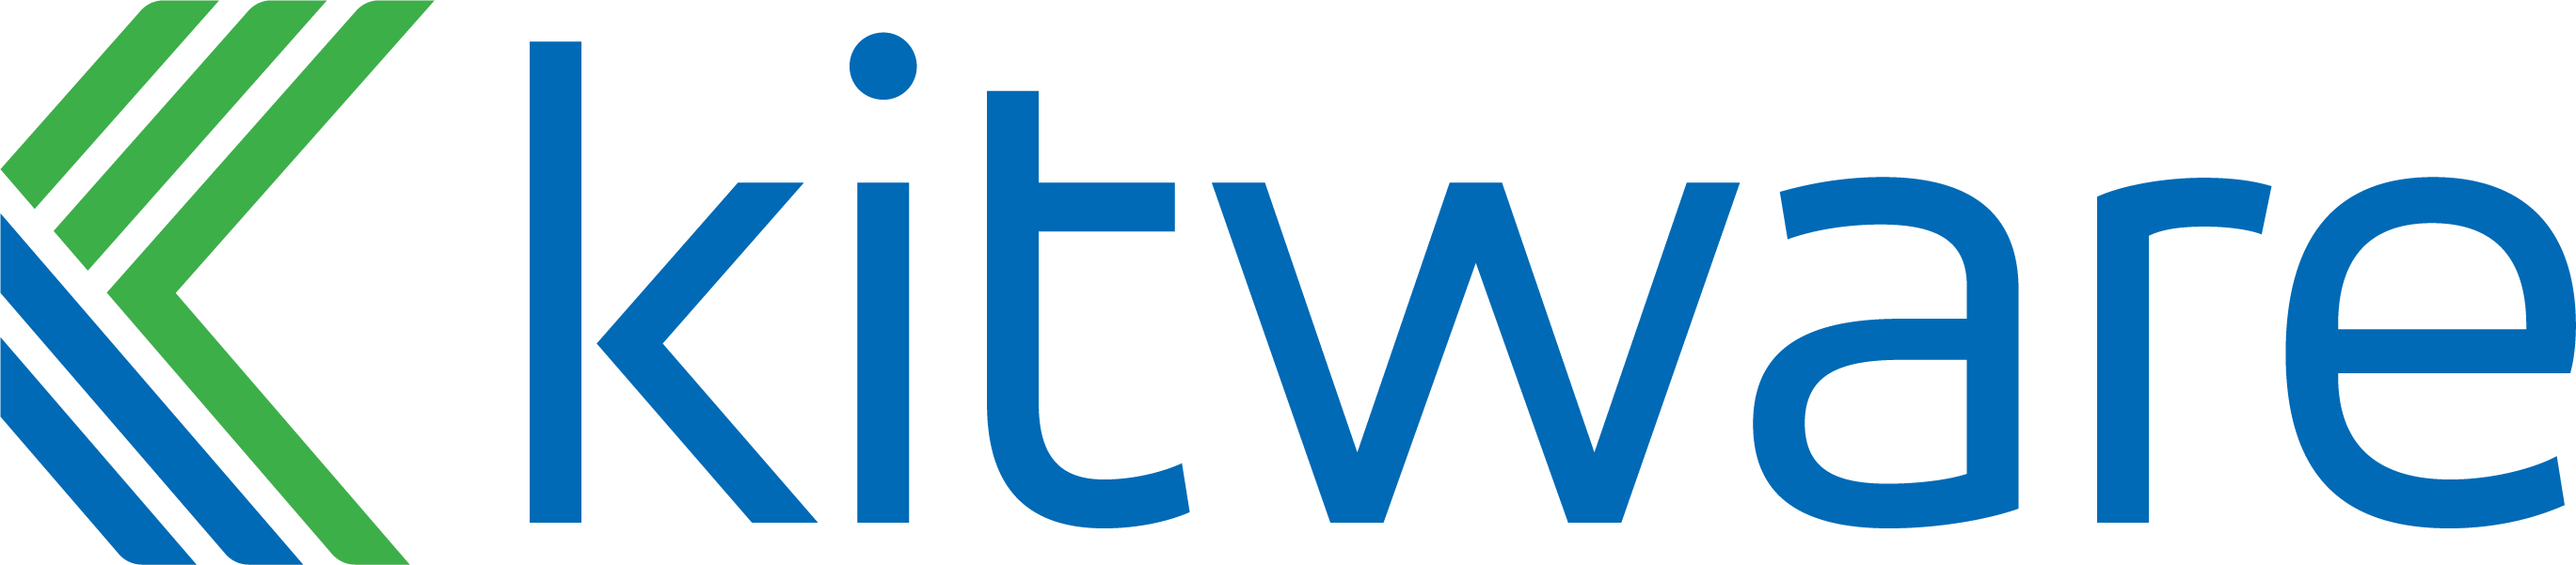 logo Kitware